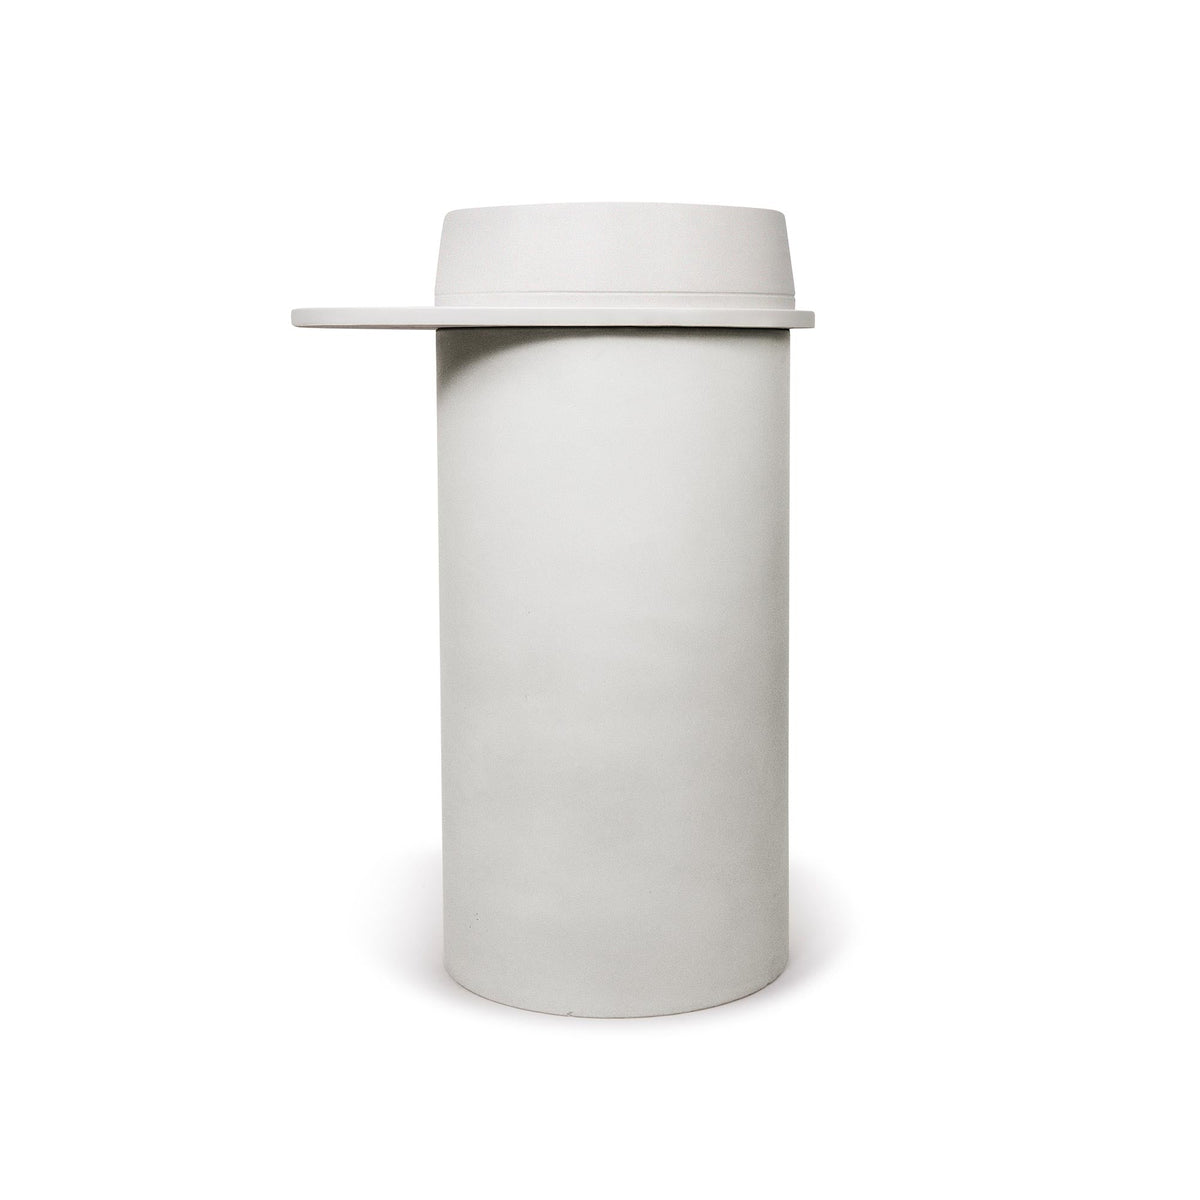 Cylinder with Tray - Funl Basin (Sky Grey,Teal)